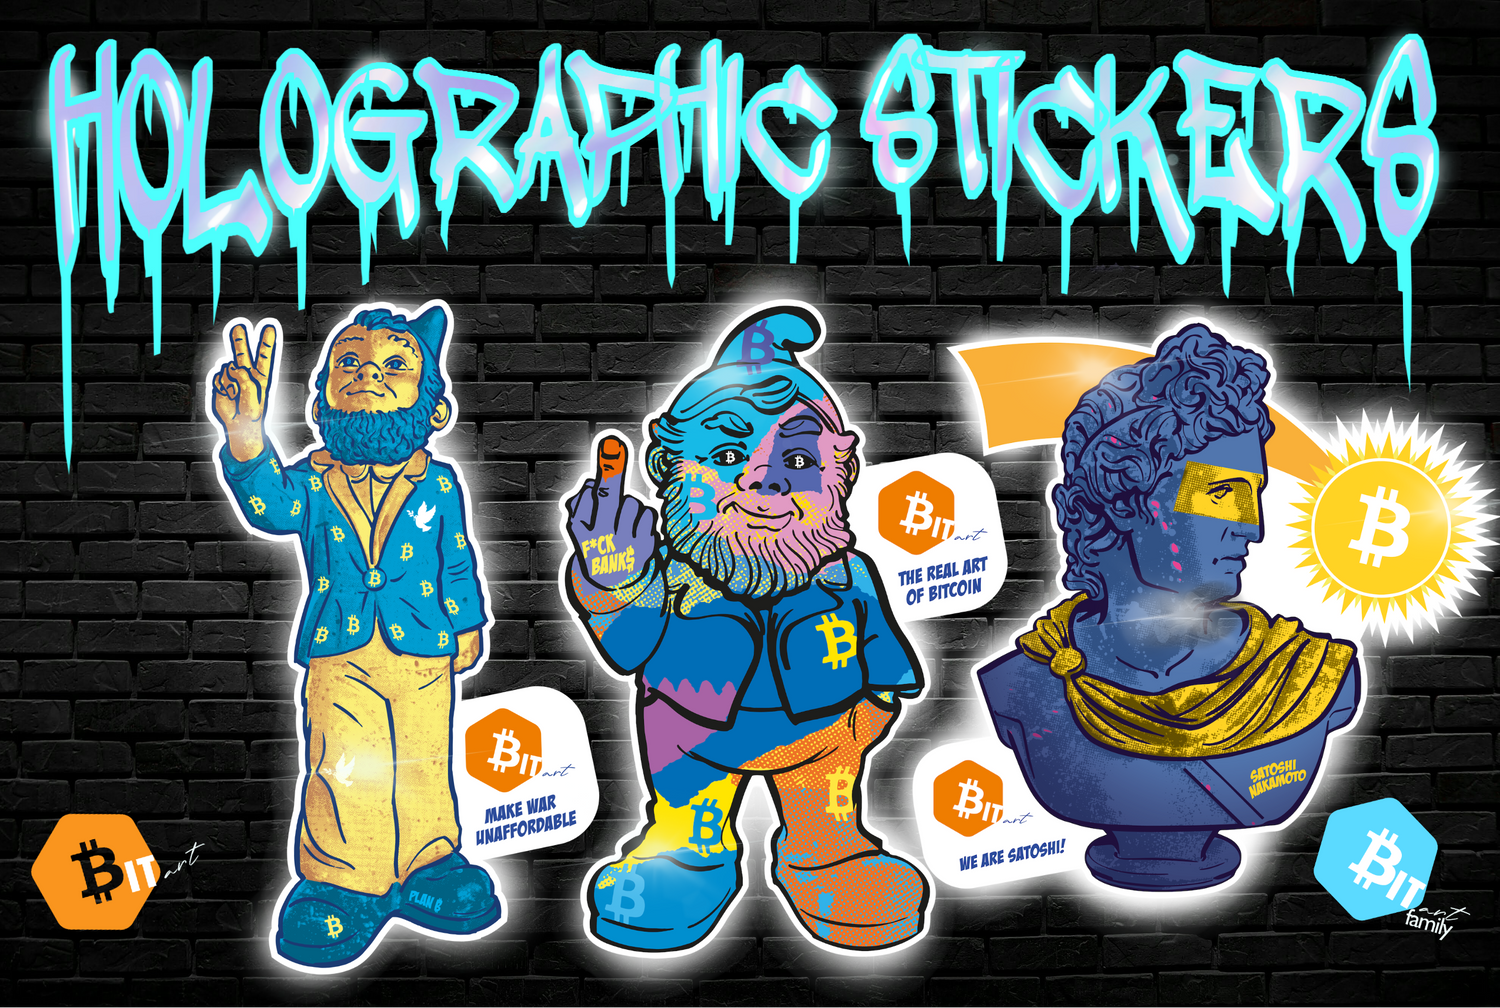 Bitart holographic Art-Stickers